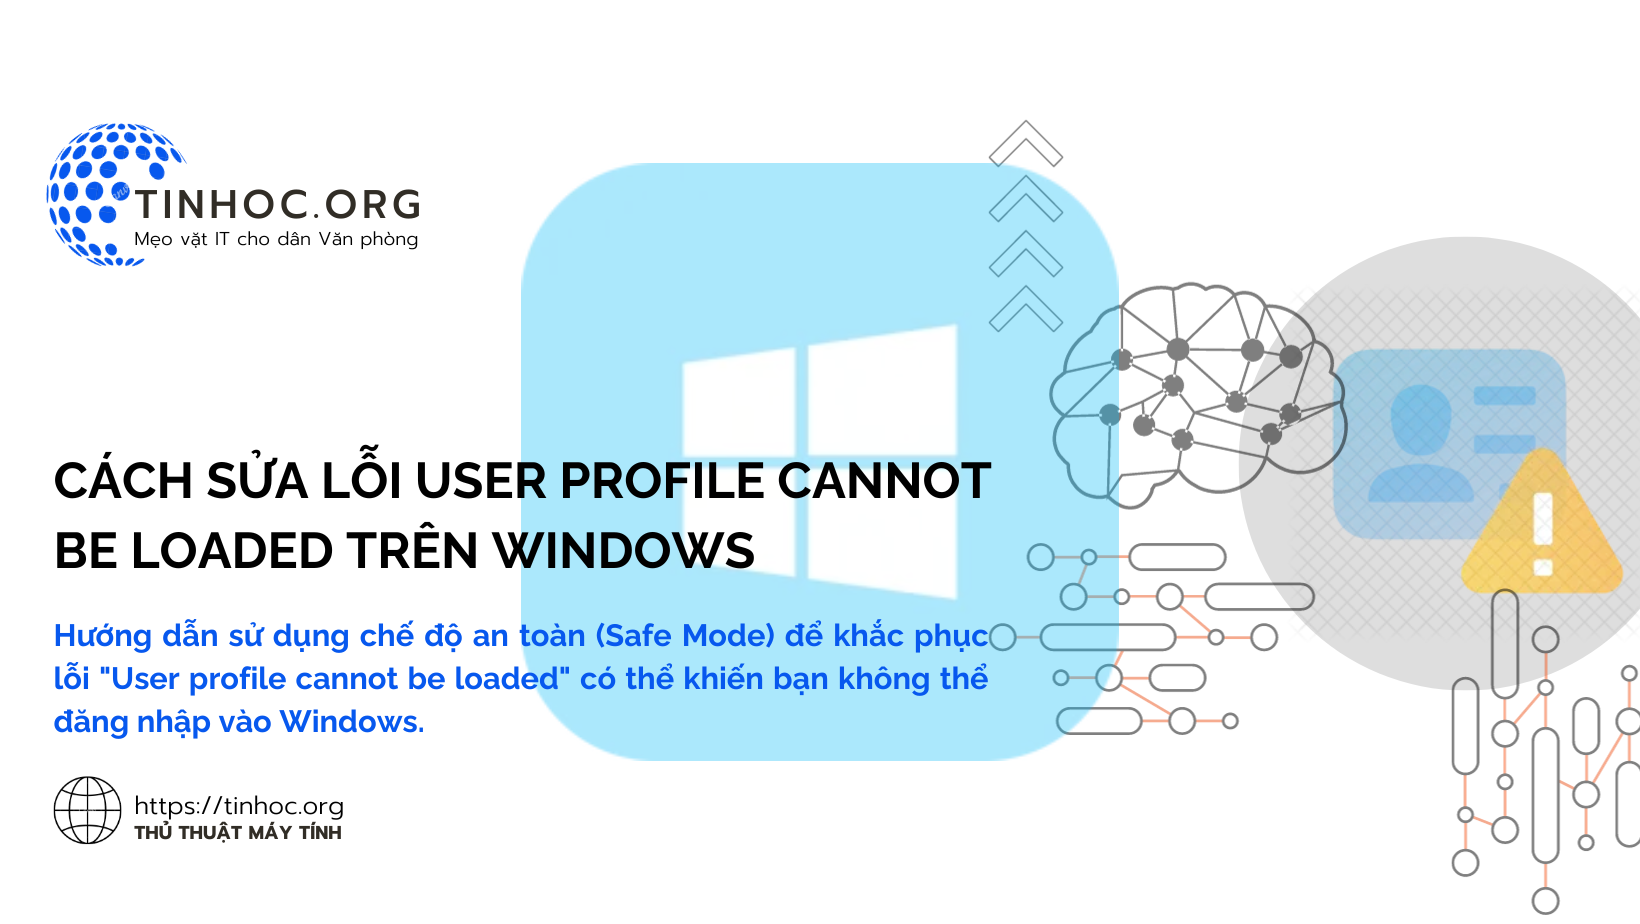 Cách sửa lỗi User profile cannot be loaded trên Windows